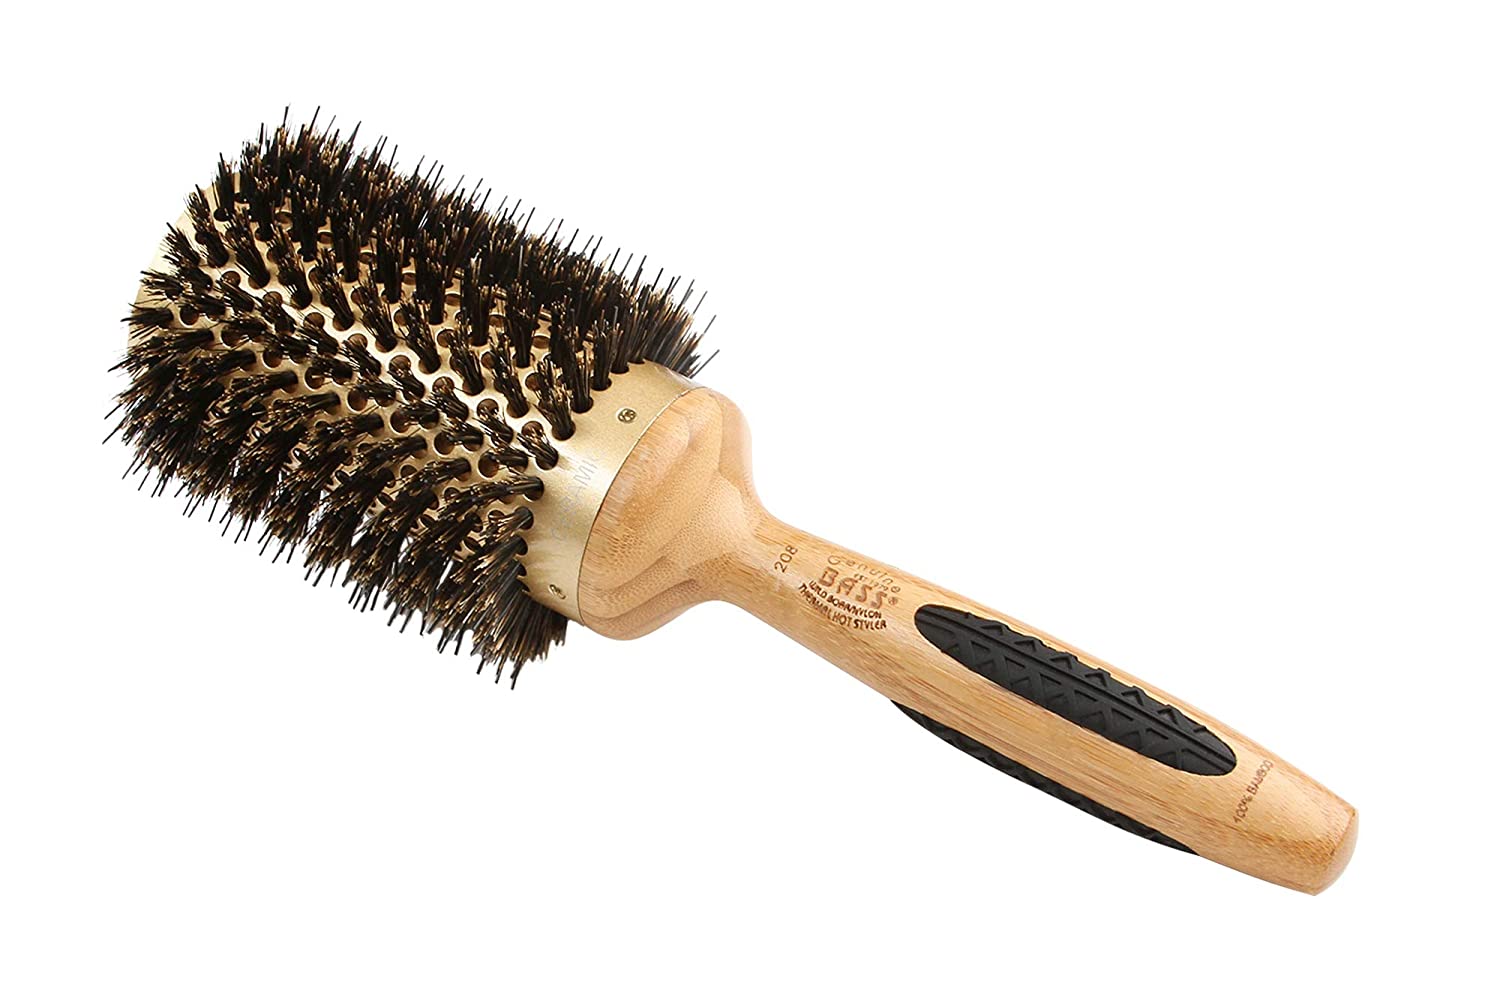 BASS BS08 Radial Hair Brush Curling Styling Boar & Nylon Bristles